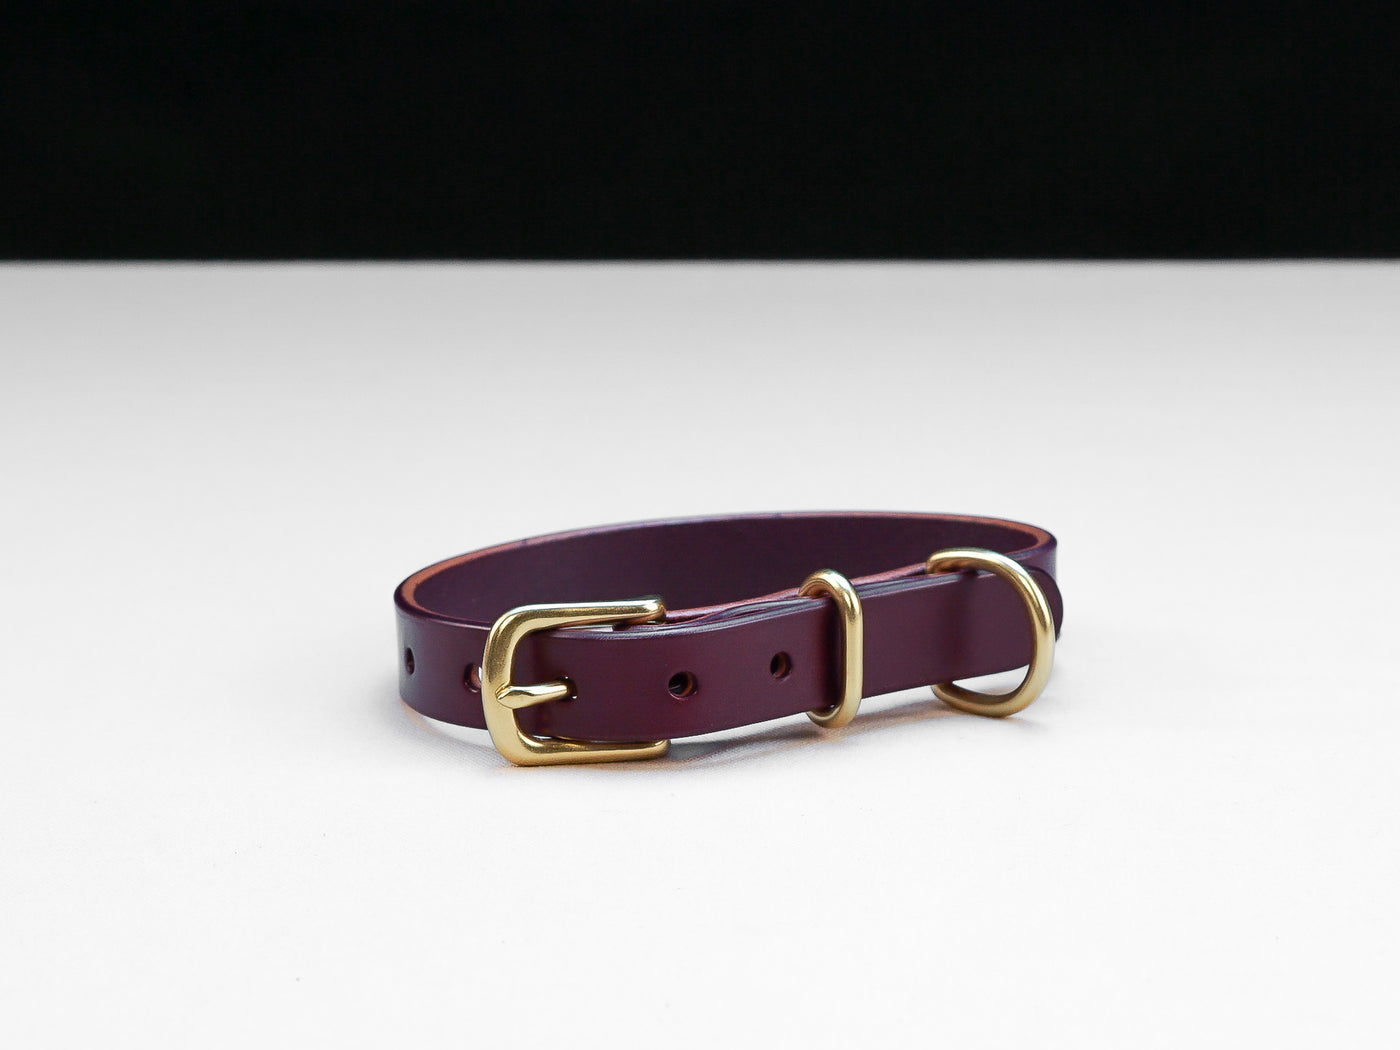 Leather Belt Dog Collar - Eggplant Purple English Bridle Leather - Atlas Leathercraft - Handmade Australian Leather Goods